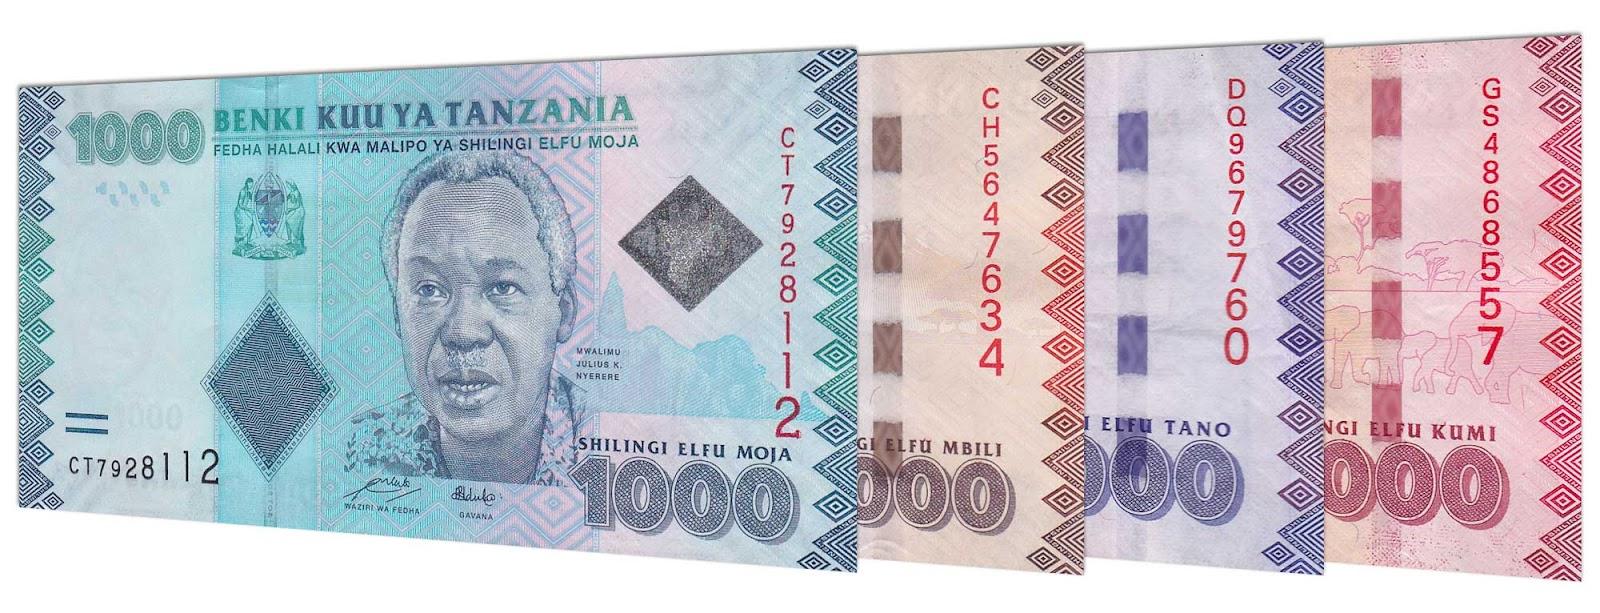 Tanzanian Shilling banknote series